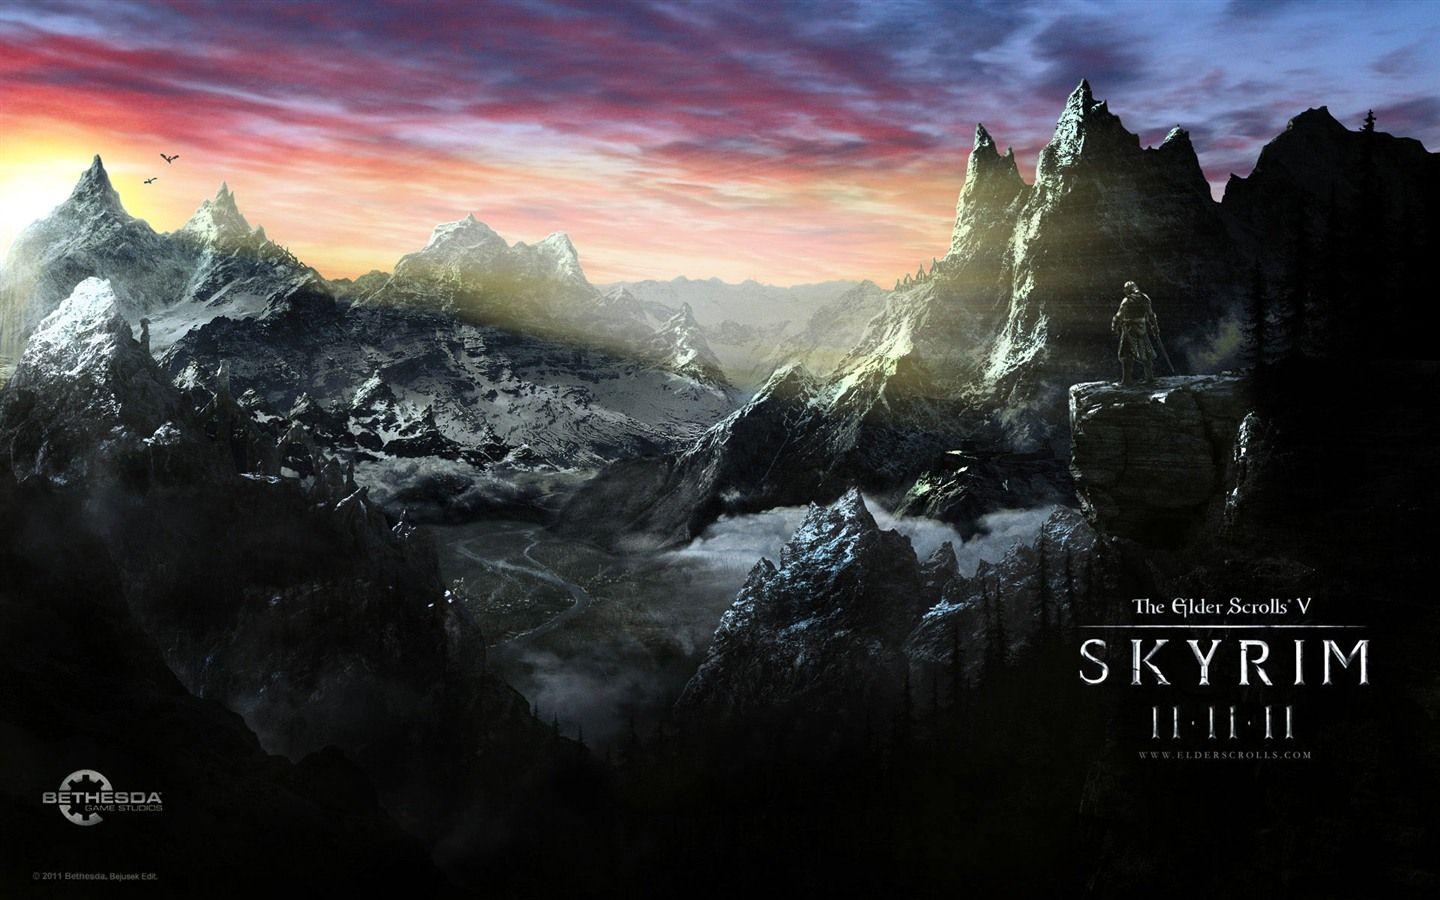 The Elder Scrolls V: Skyrim HD wallpaper Wallpaper